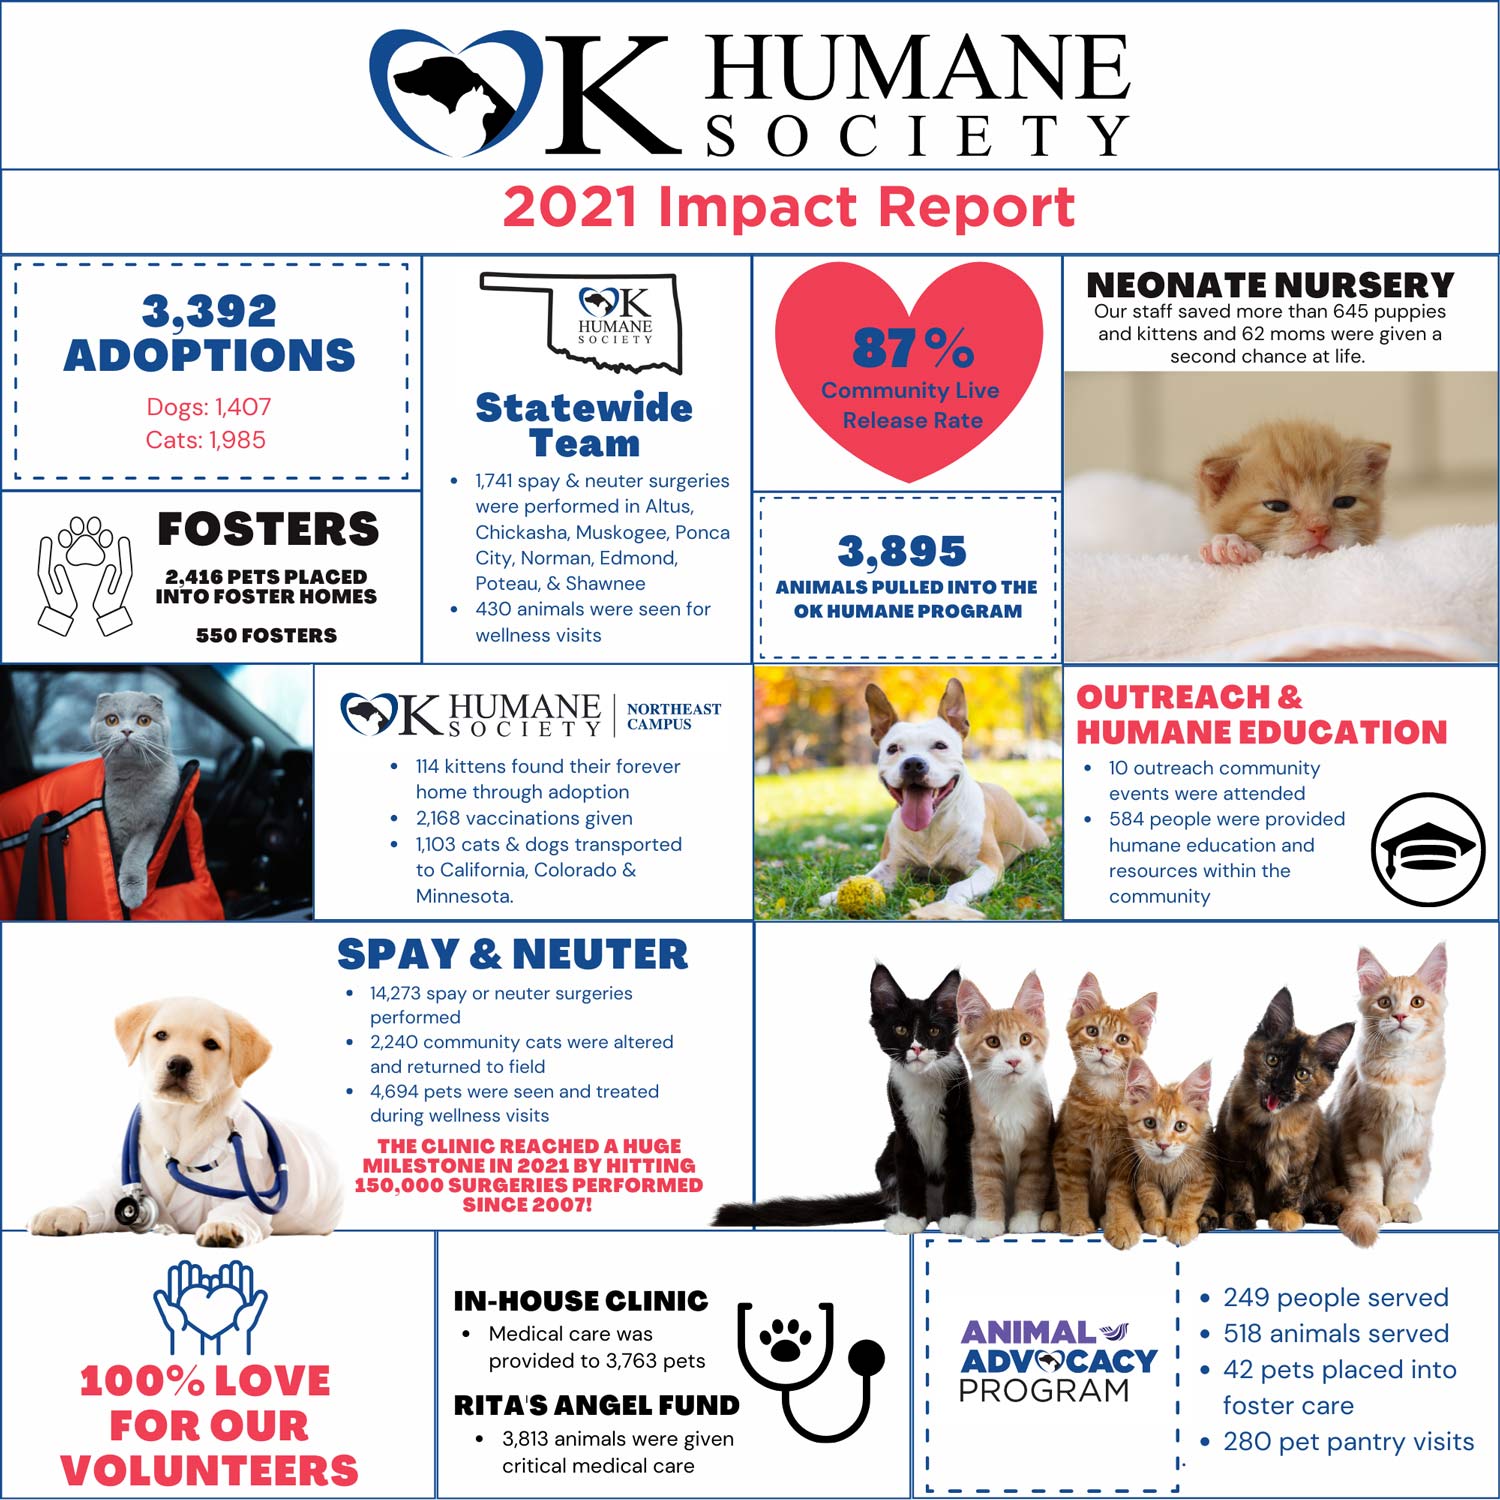 OK Humane Society | 2021 Impact Report